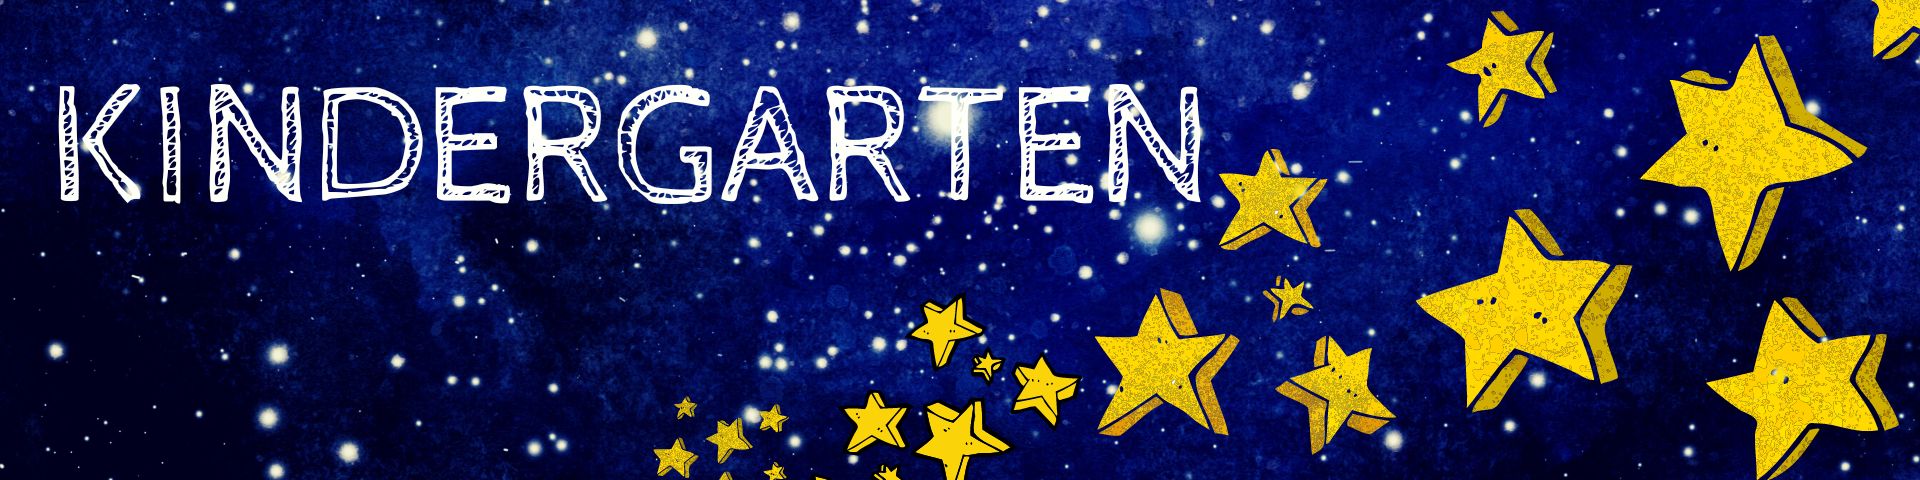 Kindergarten with stars and night sky background